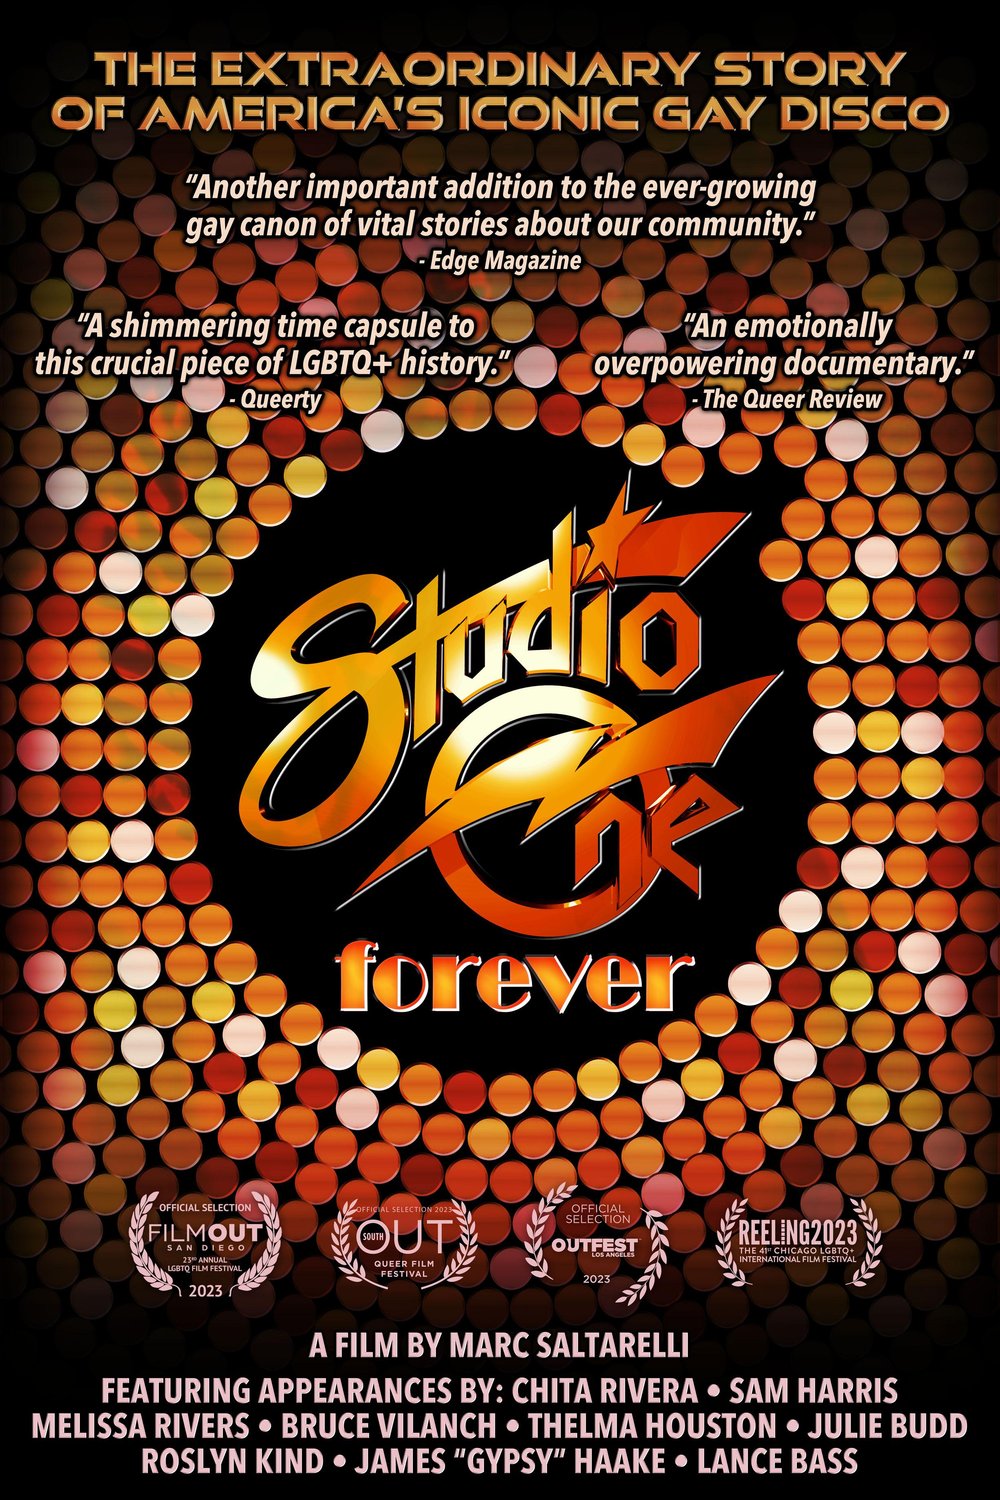 L'affiche du film Studio One Forever